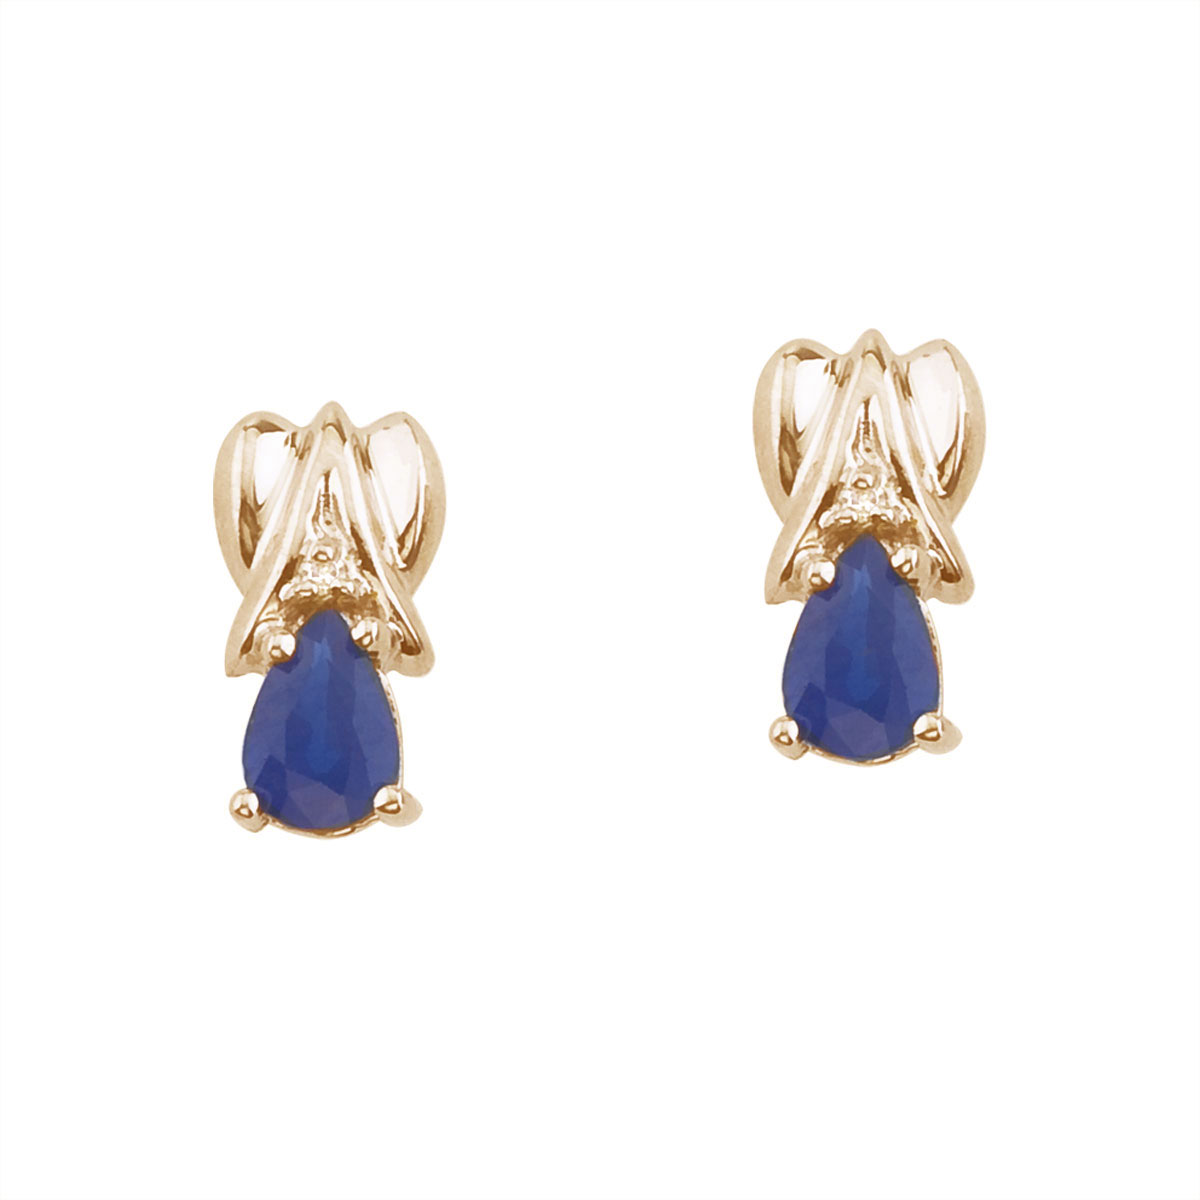 JCX2292: 14k Yellow Gold Pear-Shaped Sapphire and Diamond Stud Earrings